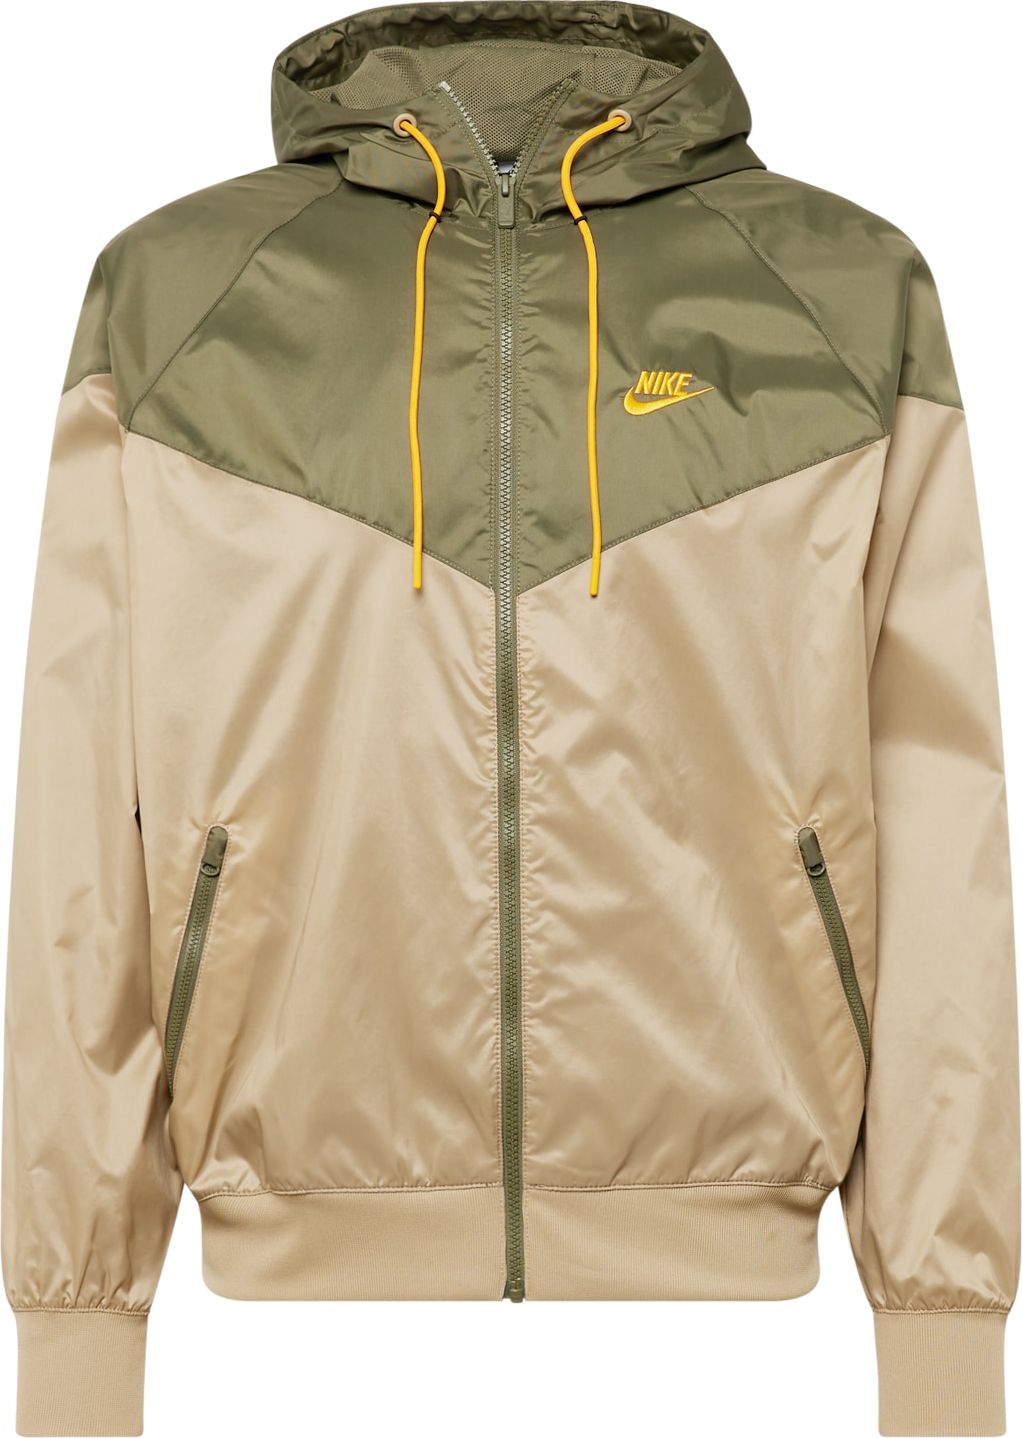 Přechodná bunda Nike Sportswear béžová / zlatě žlutá / khaki